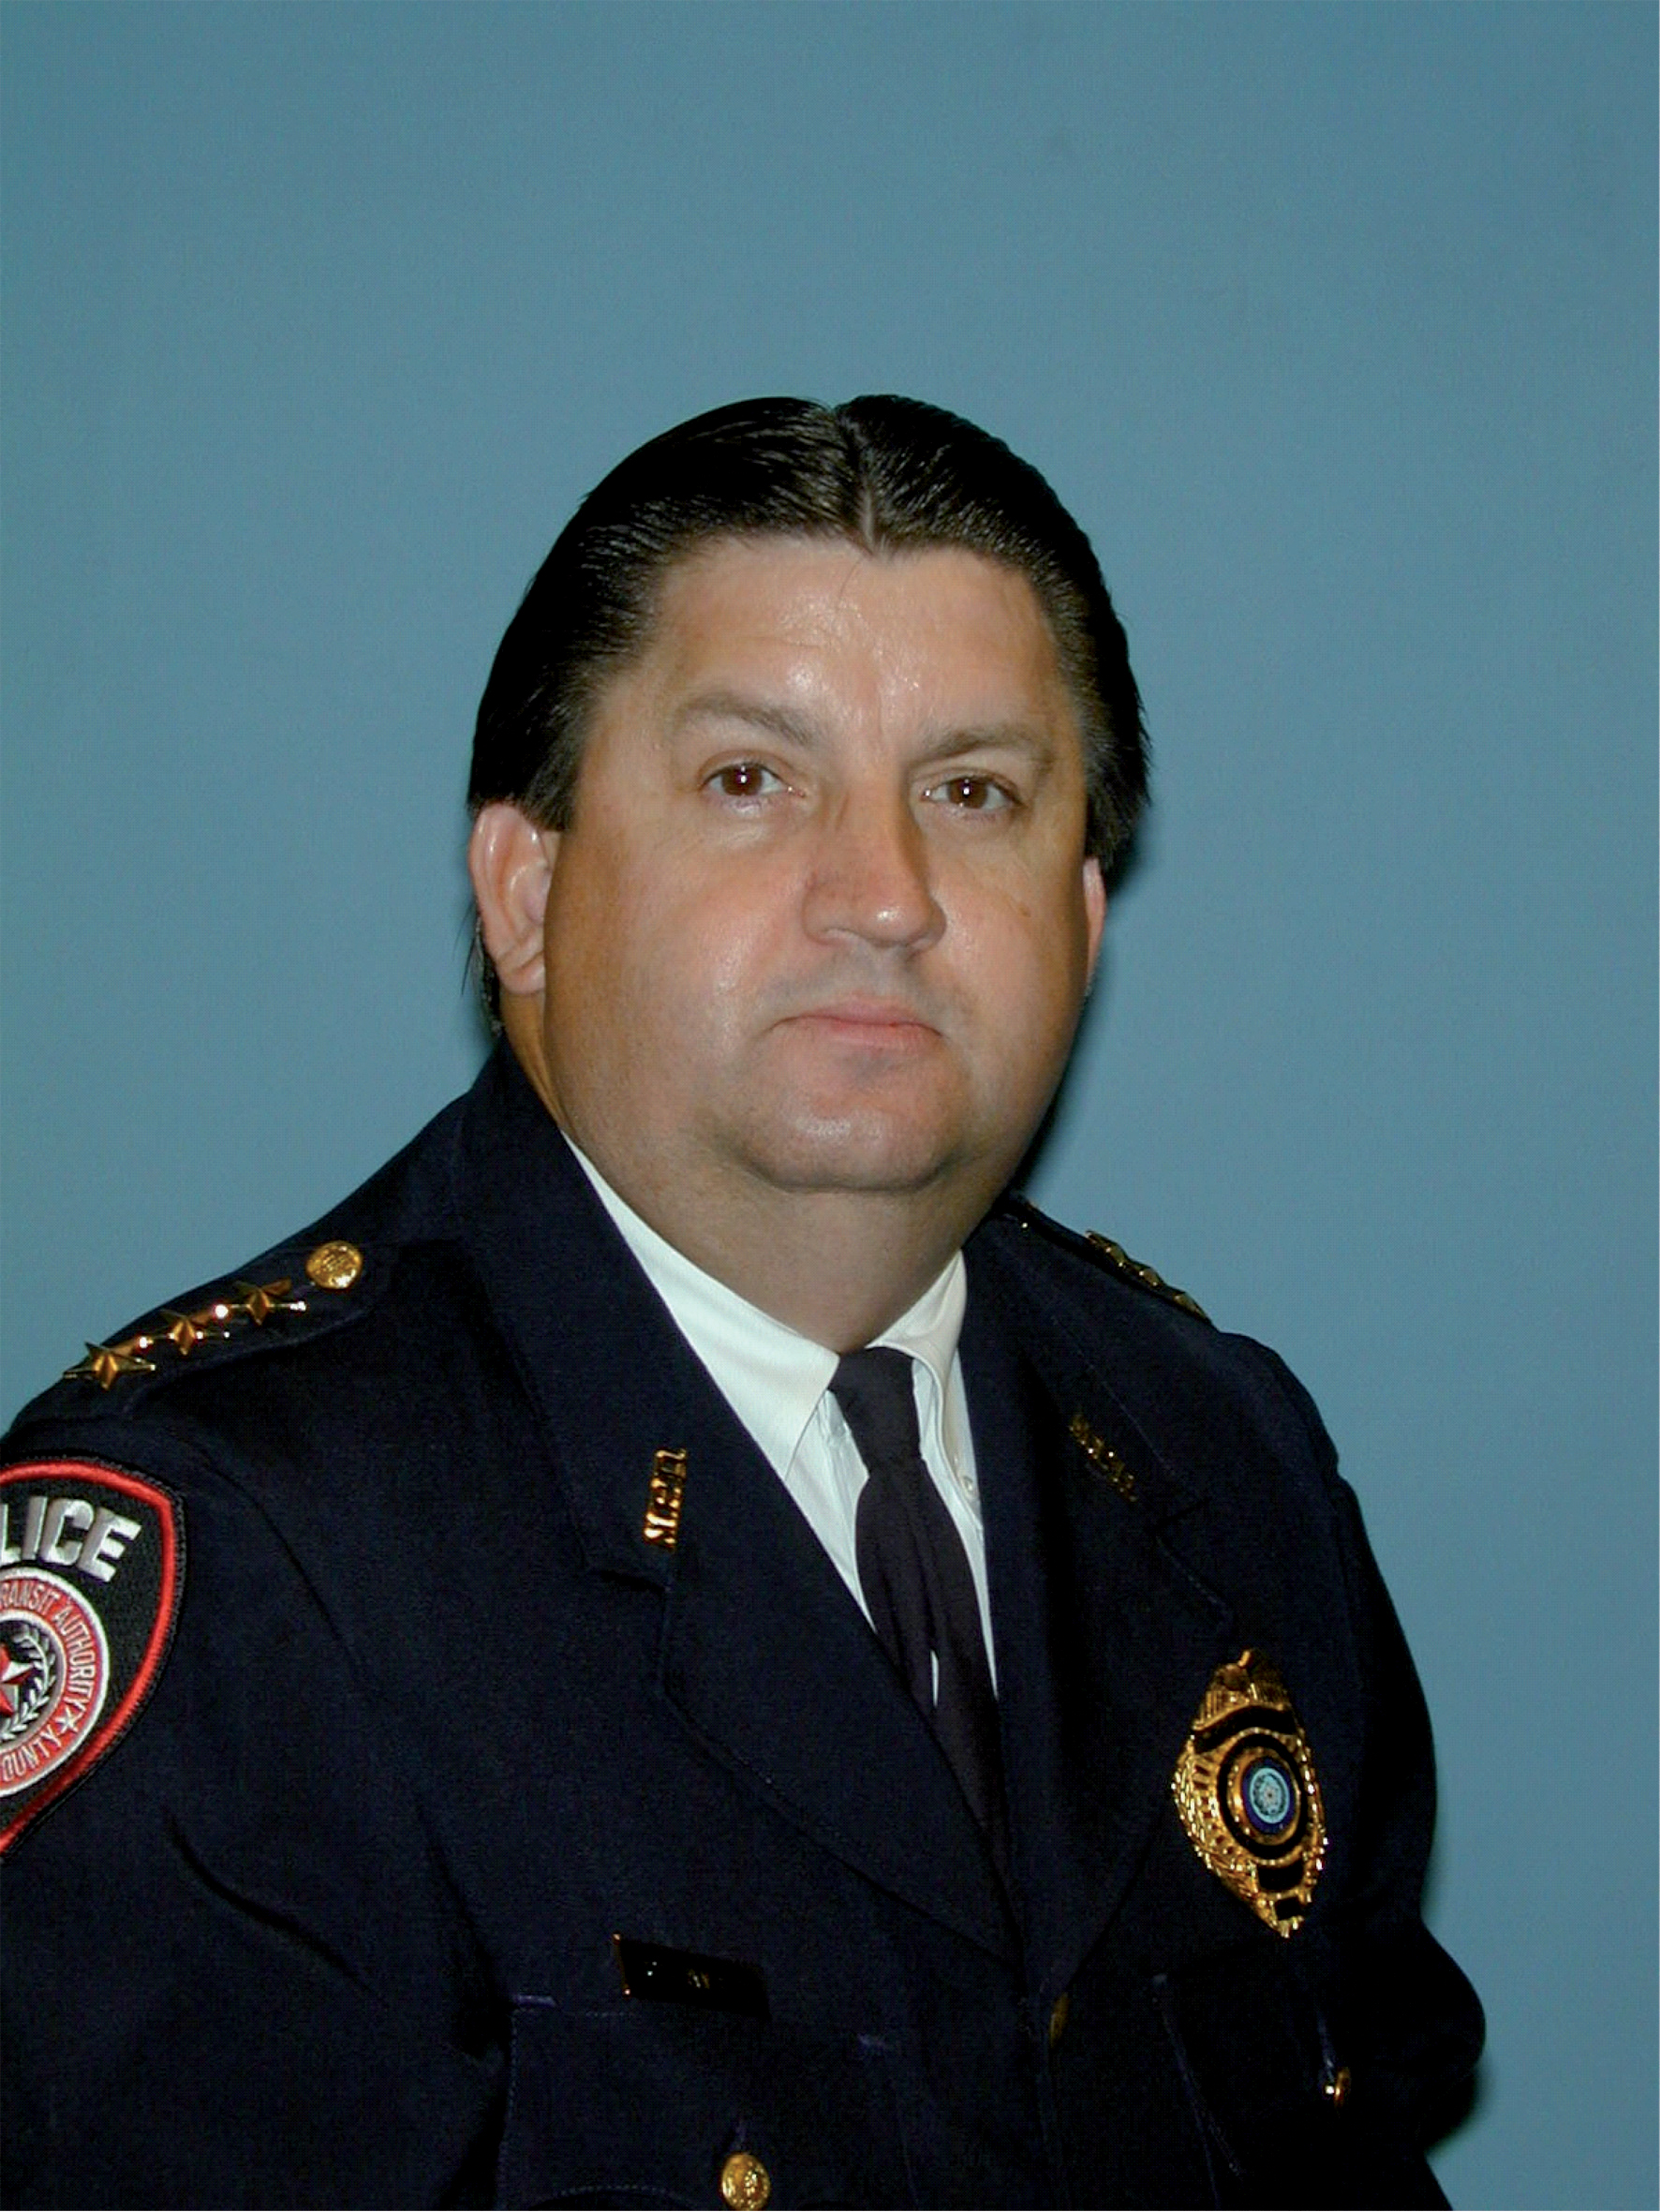 Harris County Chief of Police Thomas C. Lambert.